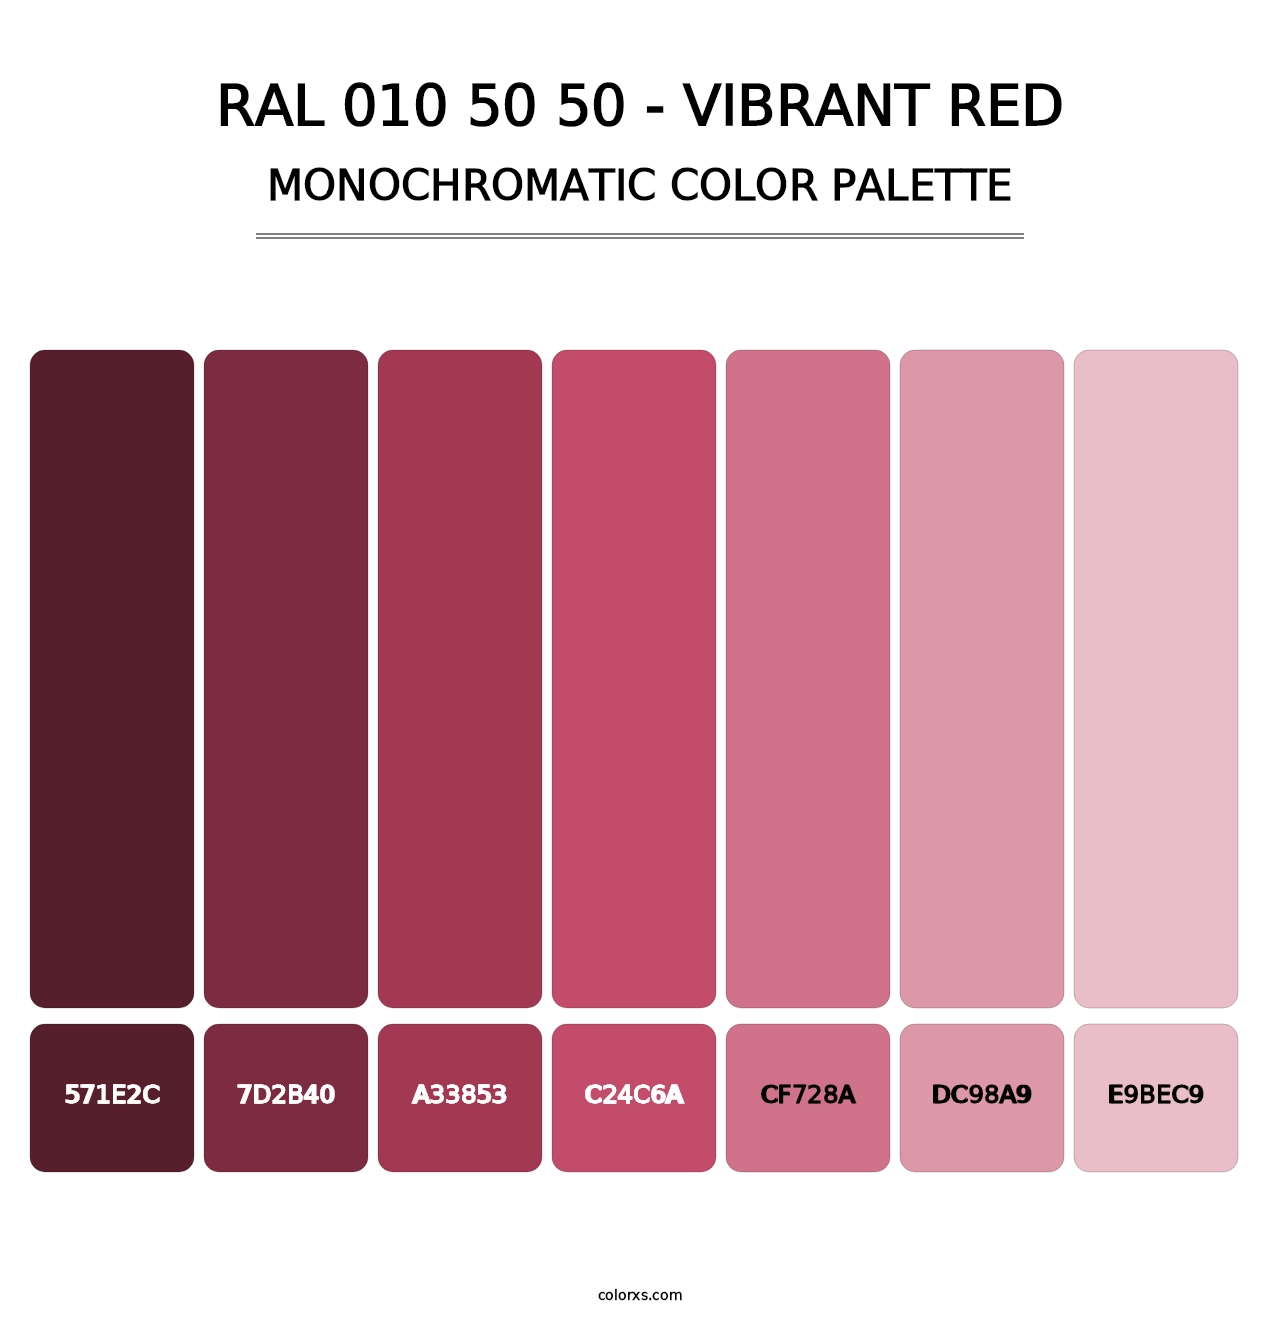 RAL 010 50 50 - Vibrant Red - Monochromatic Color Palette